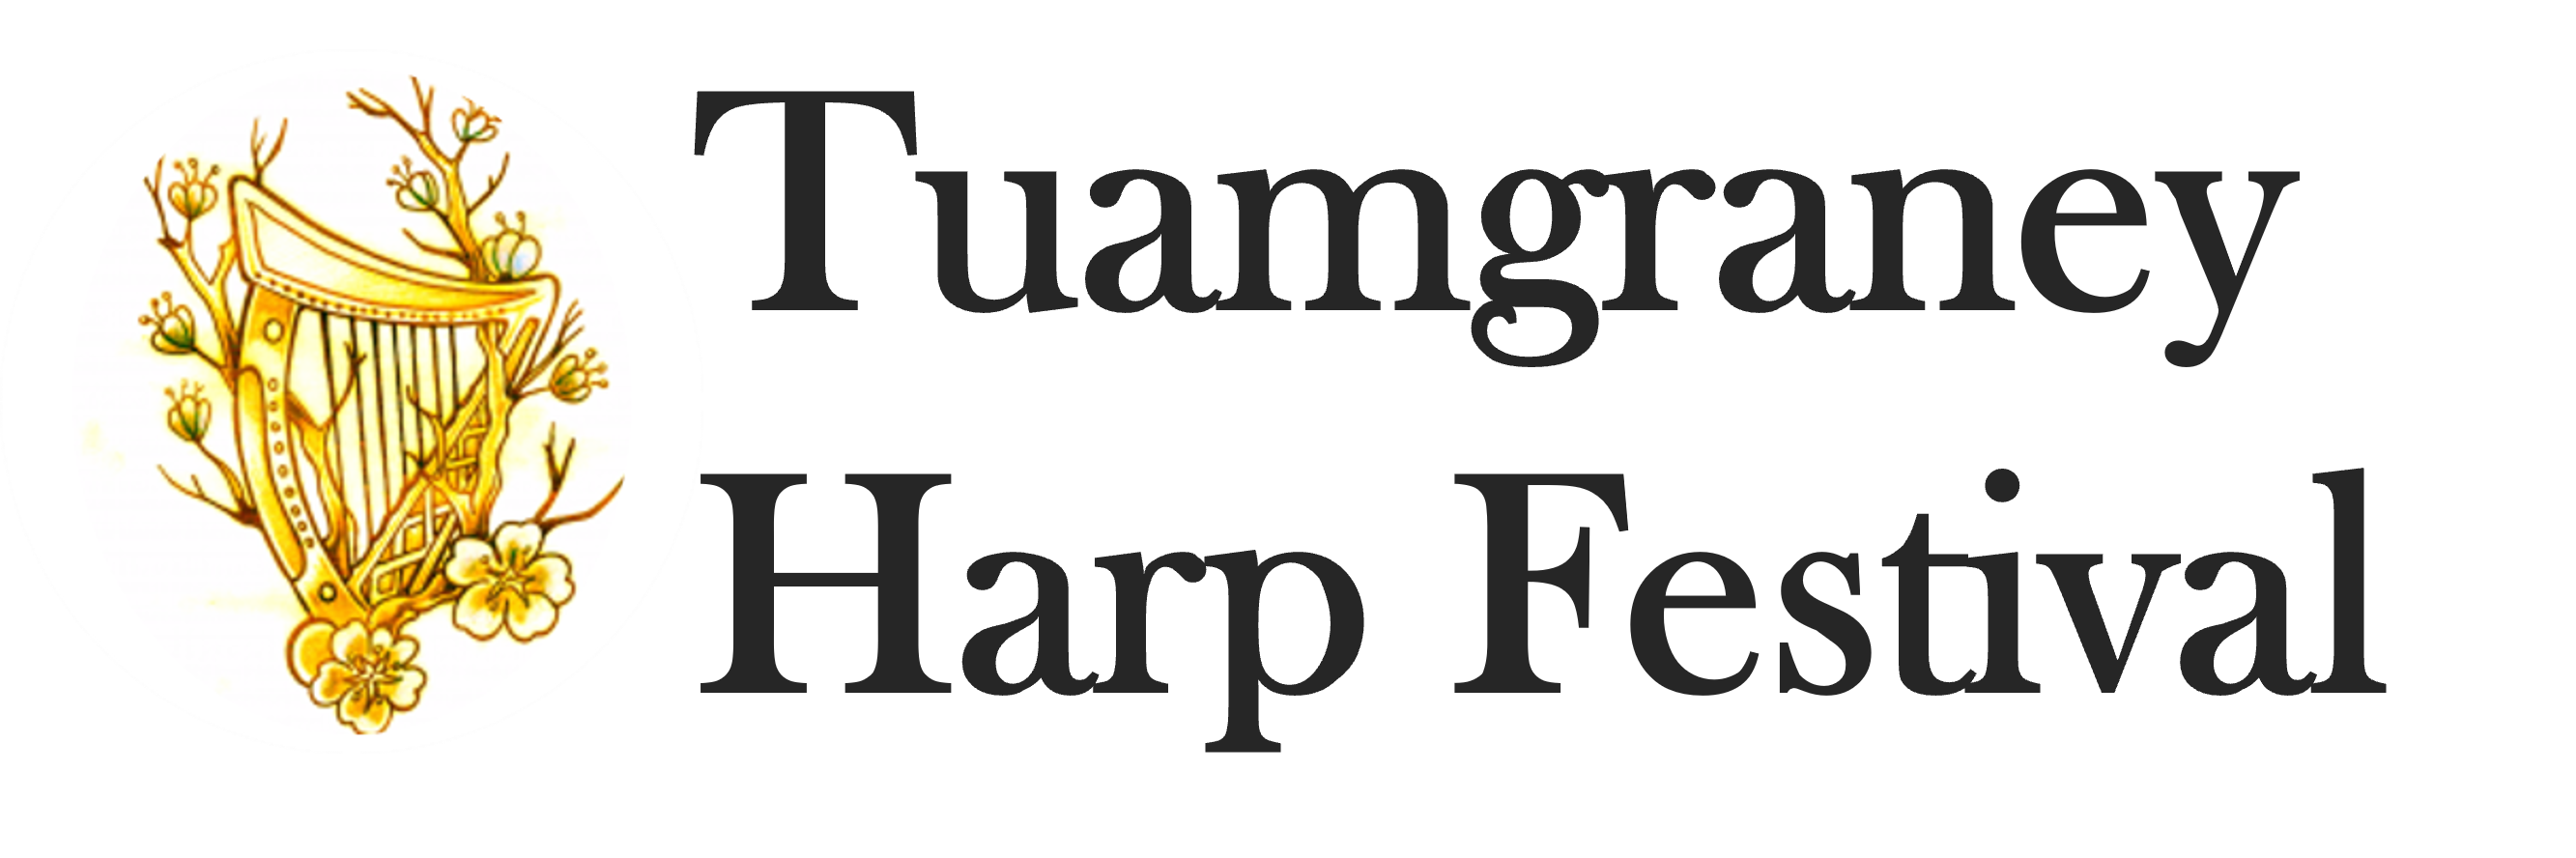 Tuamgraney Harp Festival